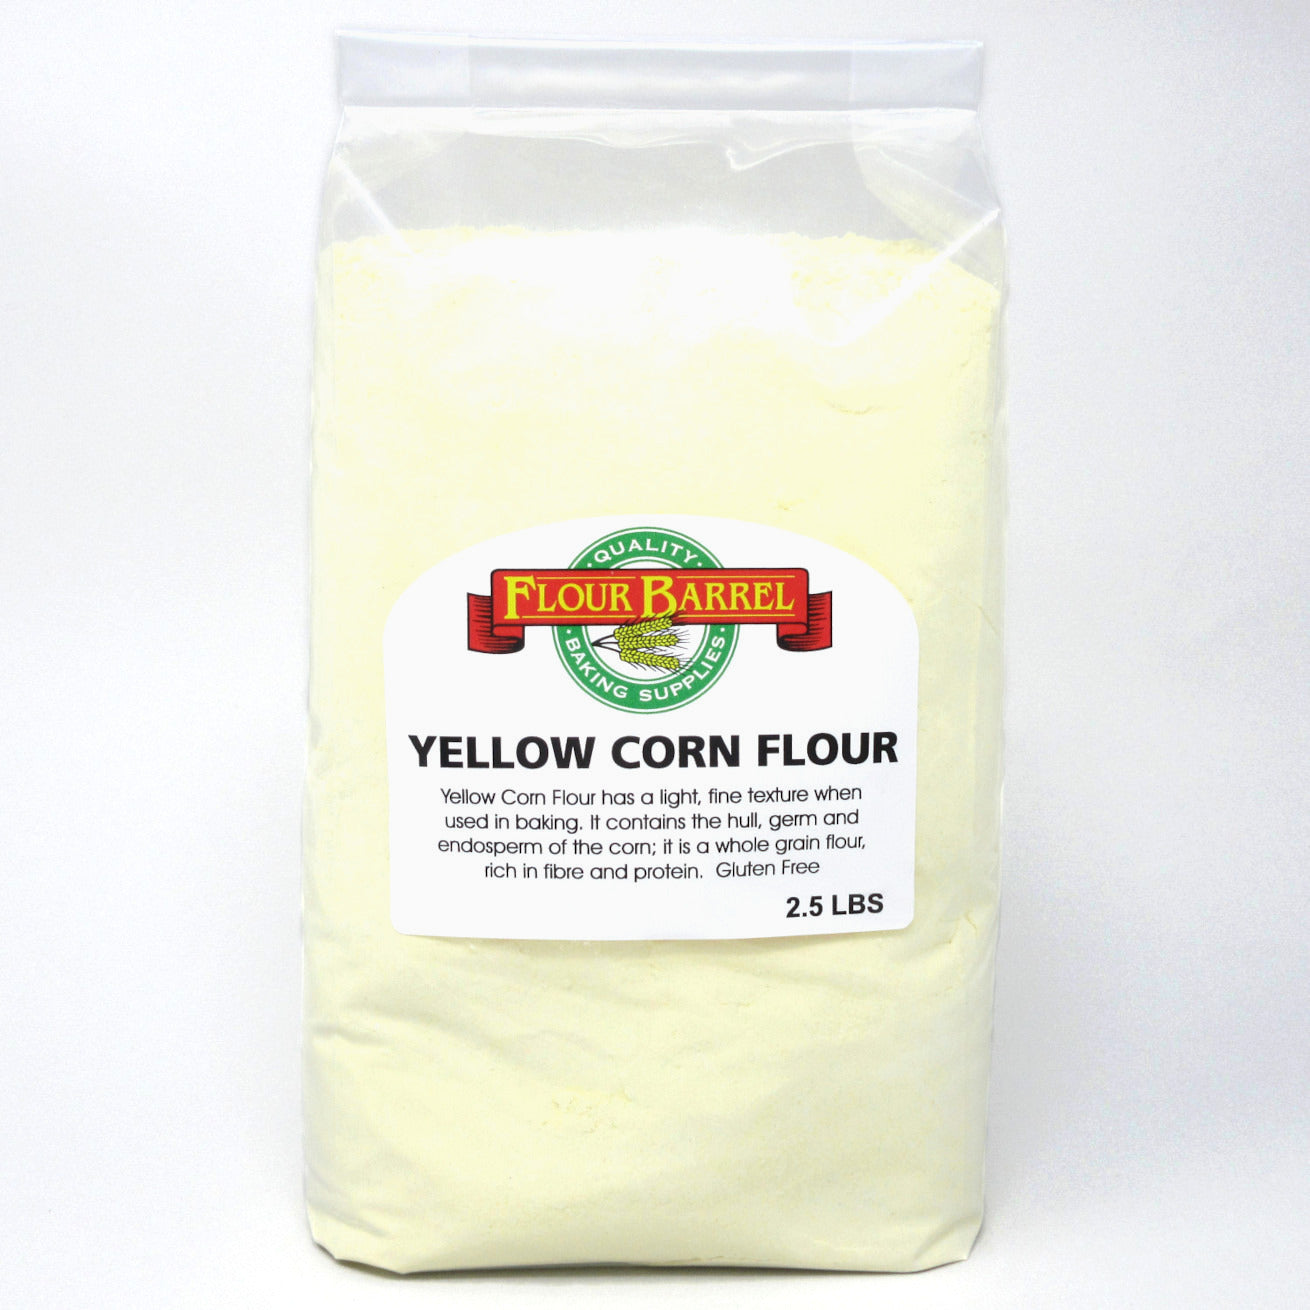 Flour Barrel product image - Yellow Corn Flour